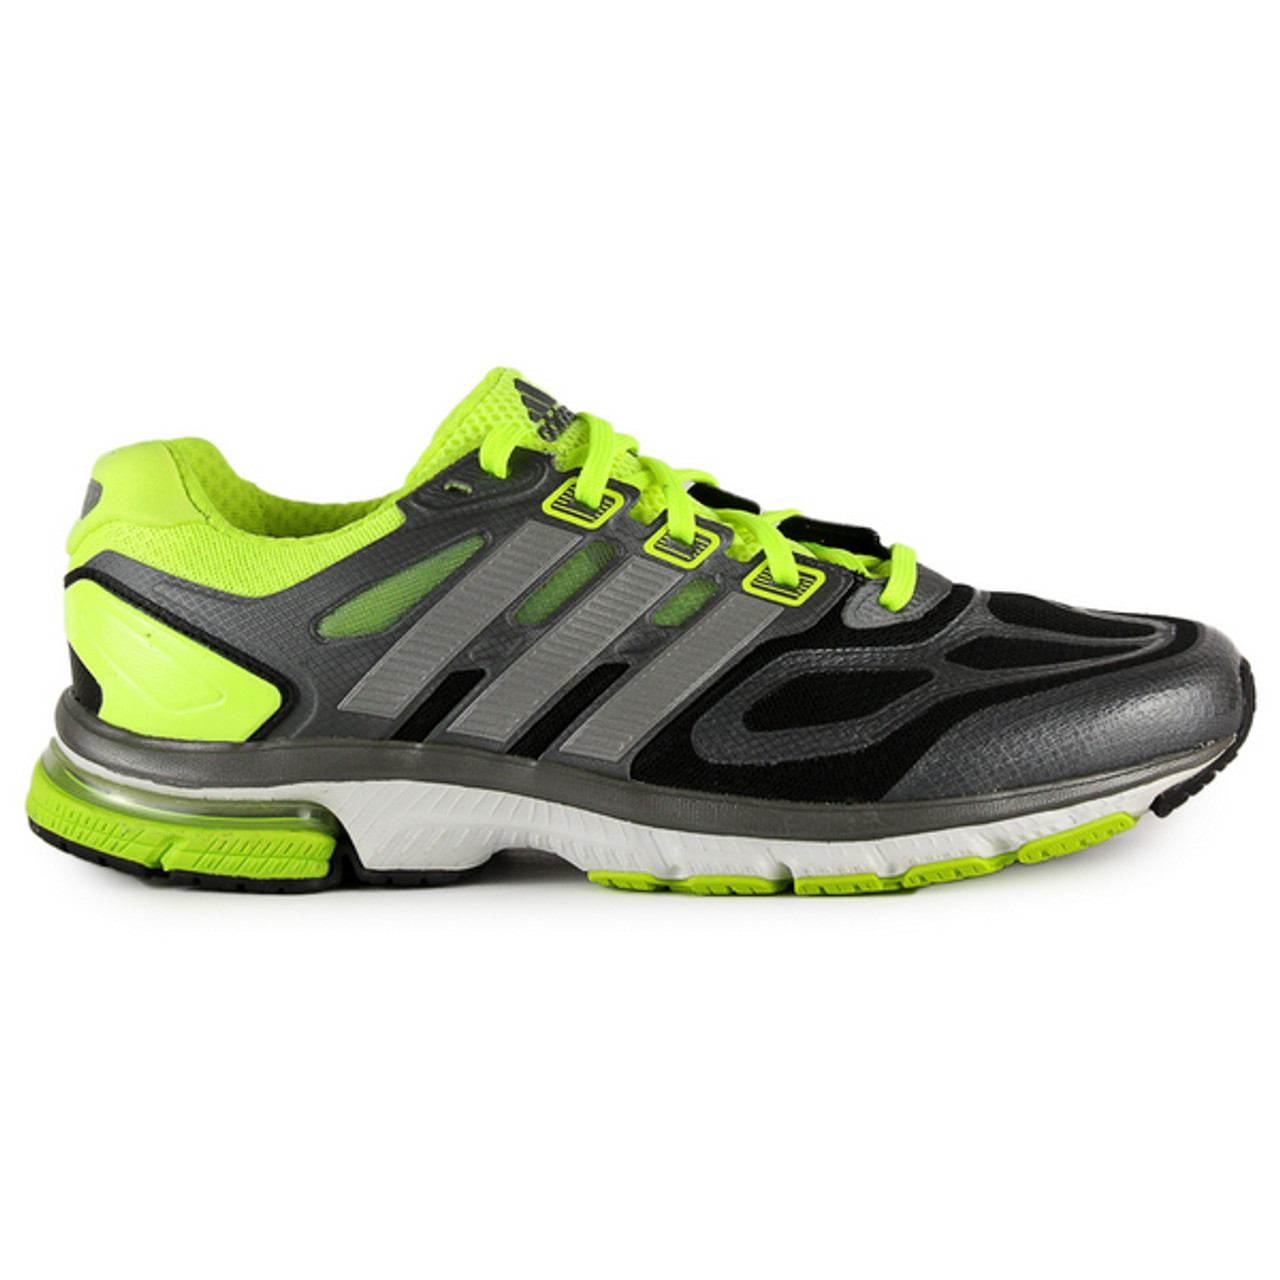 Adidas Supernova Sequence 6 Black/Electric Green Mens Running Shoes - |  Discount Adidas Men's Athletic Shoes & More - Shoolu.com | Shoolu.com